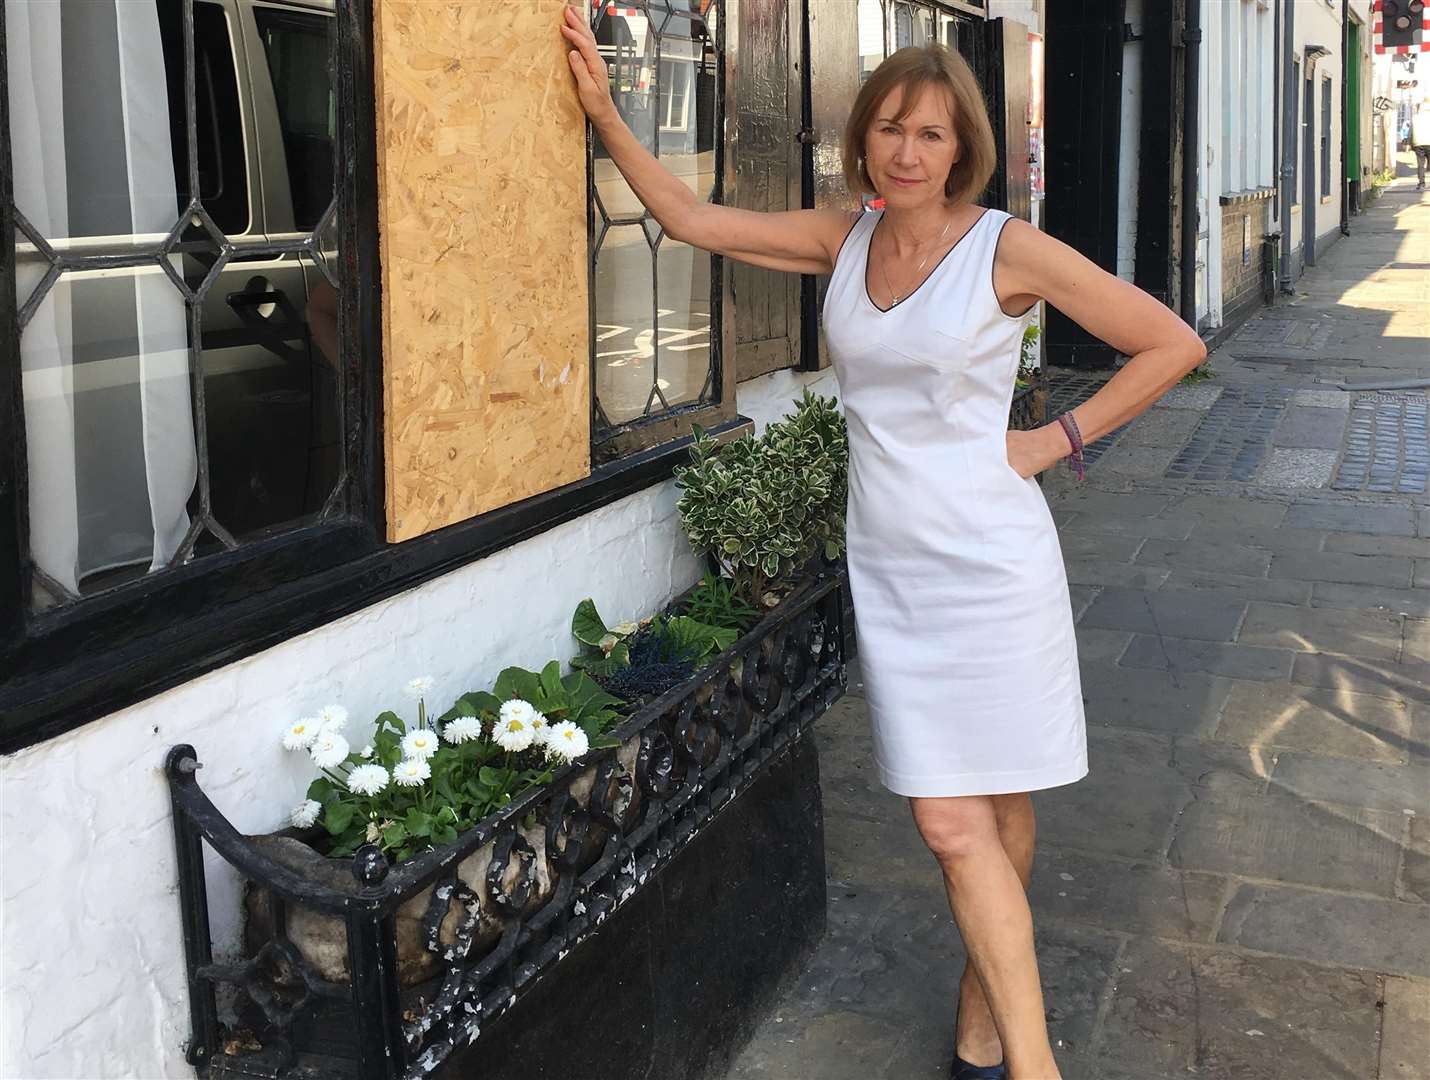 Sandie de Rougemont beside the most recent smashed window